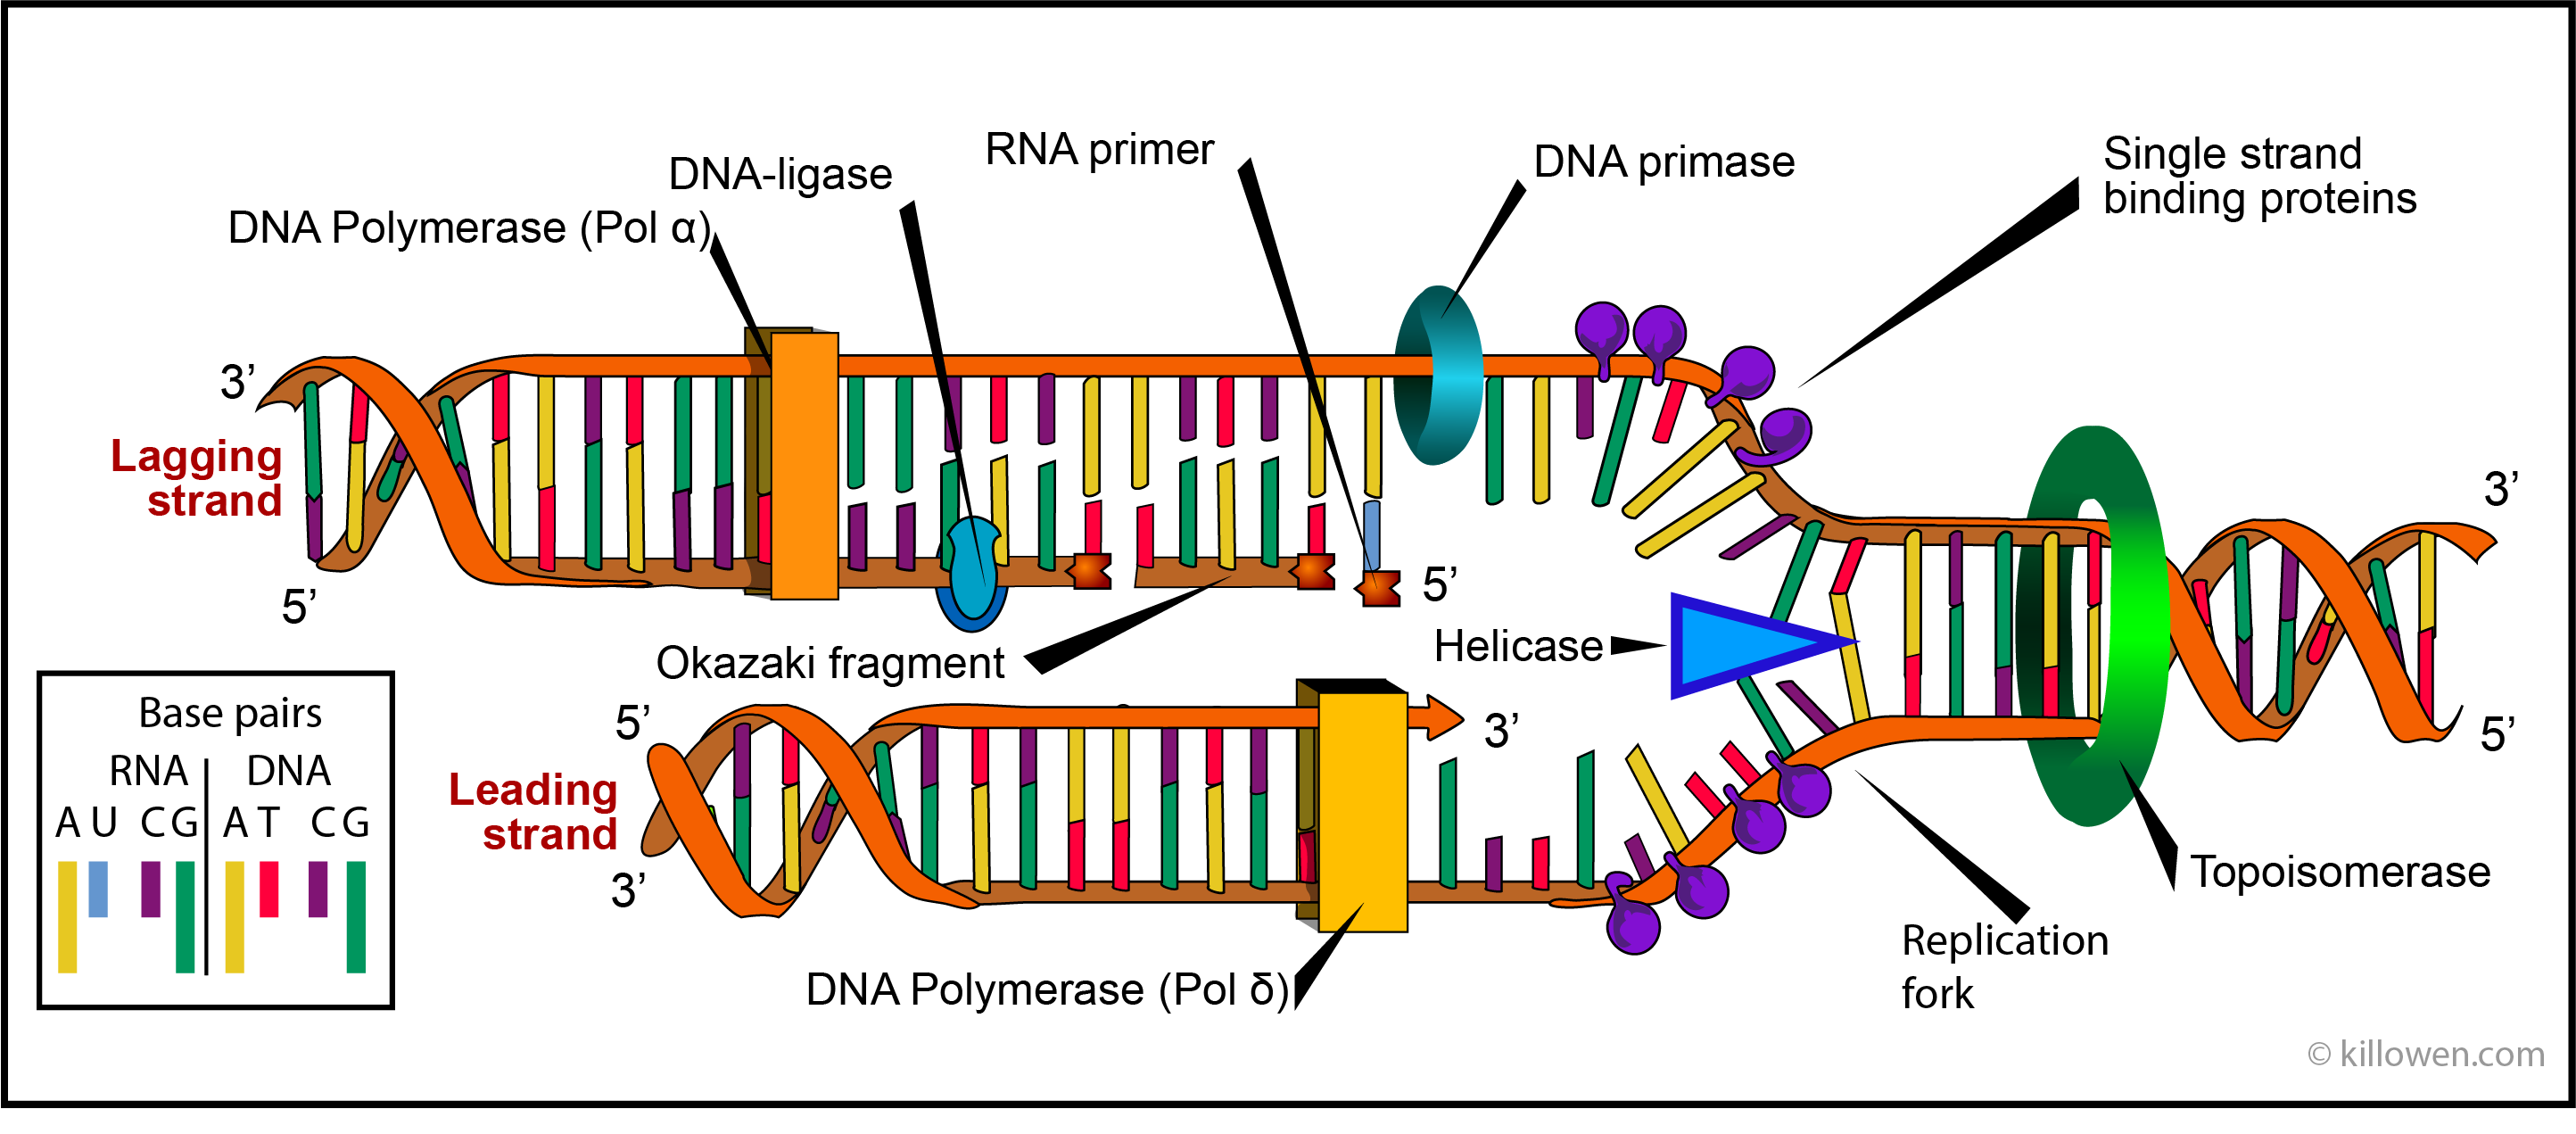 diez-mala-suerte-carencia-replicative-dna-polymerases-gatear